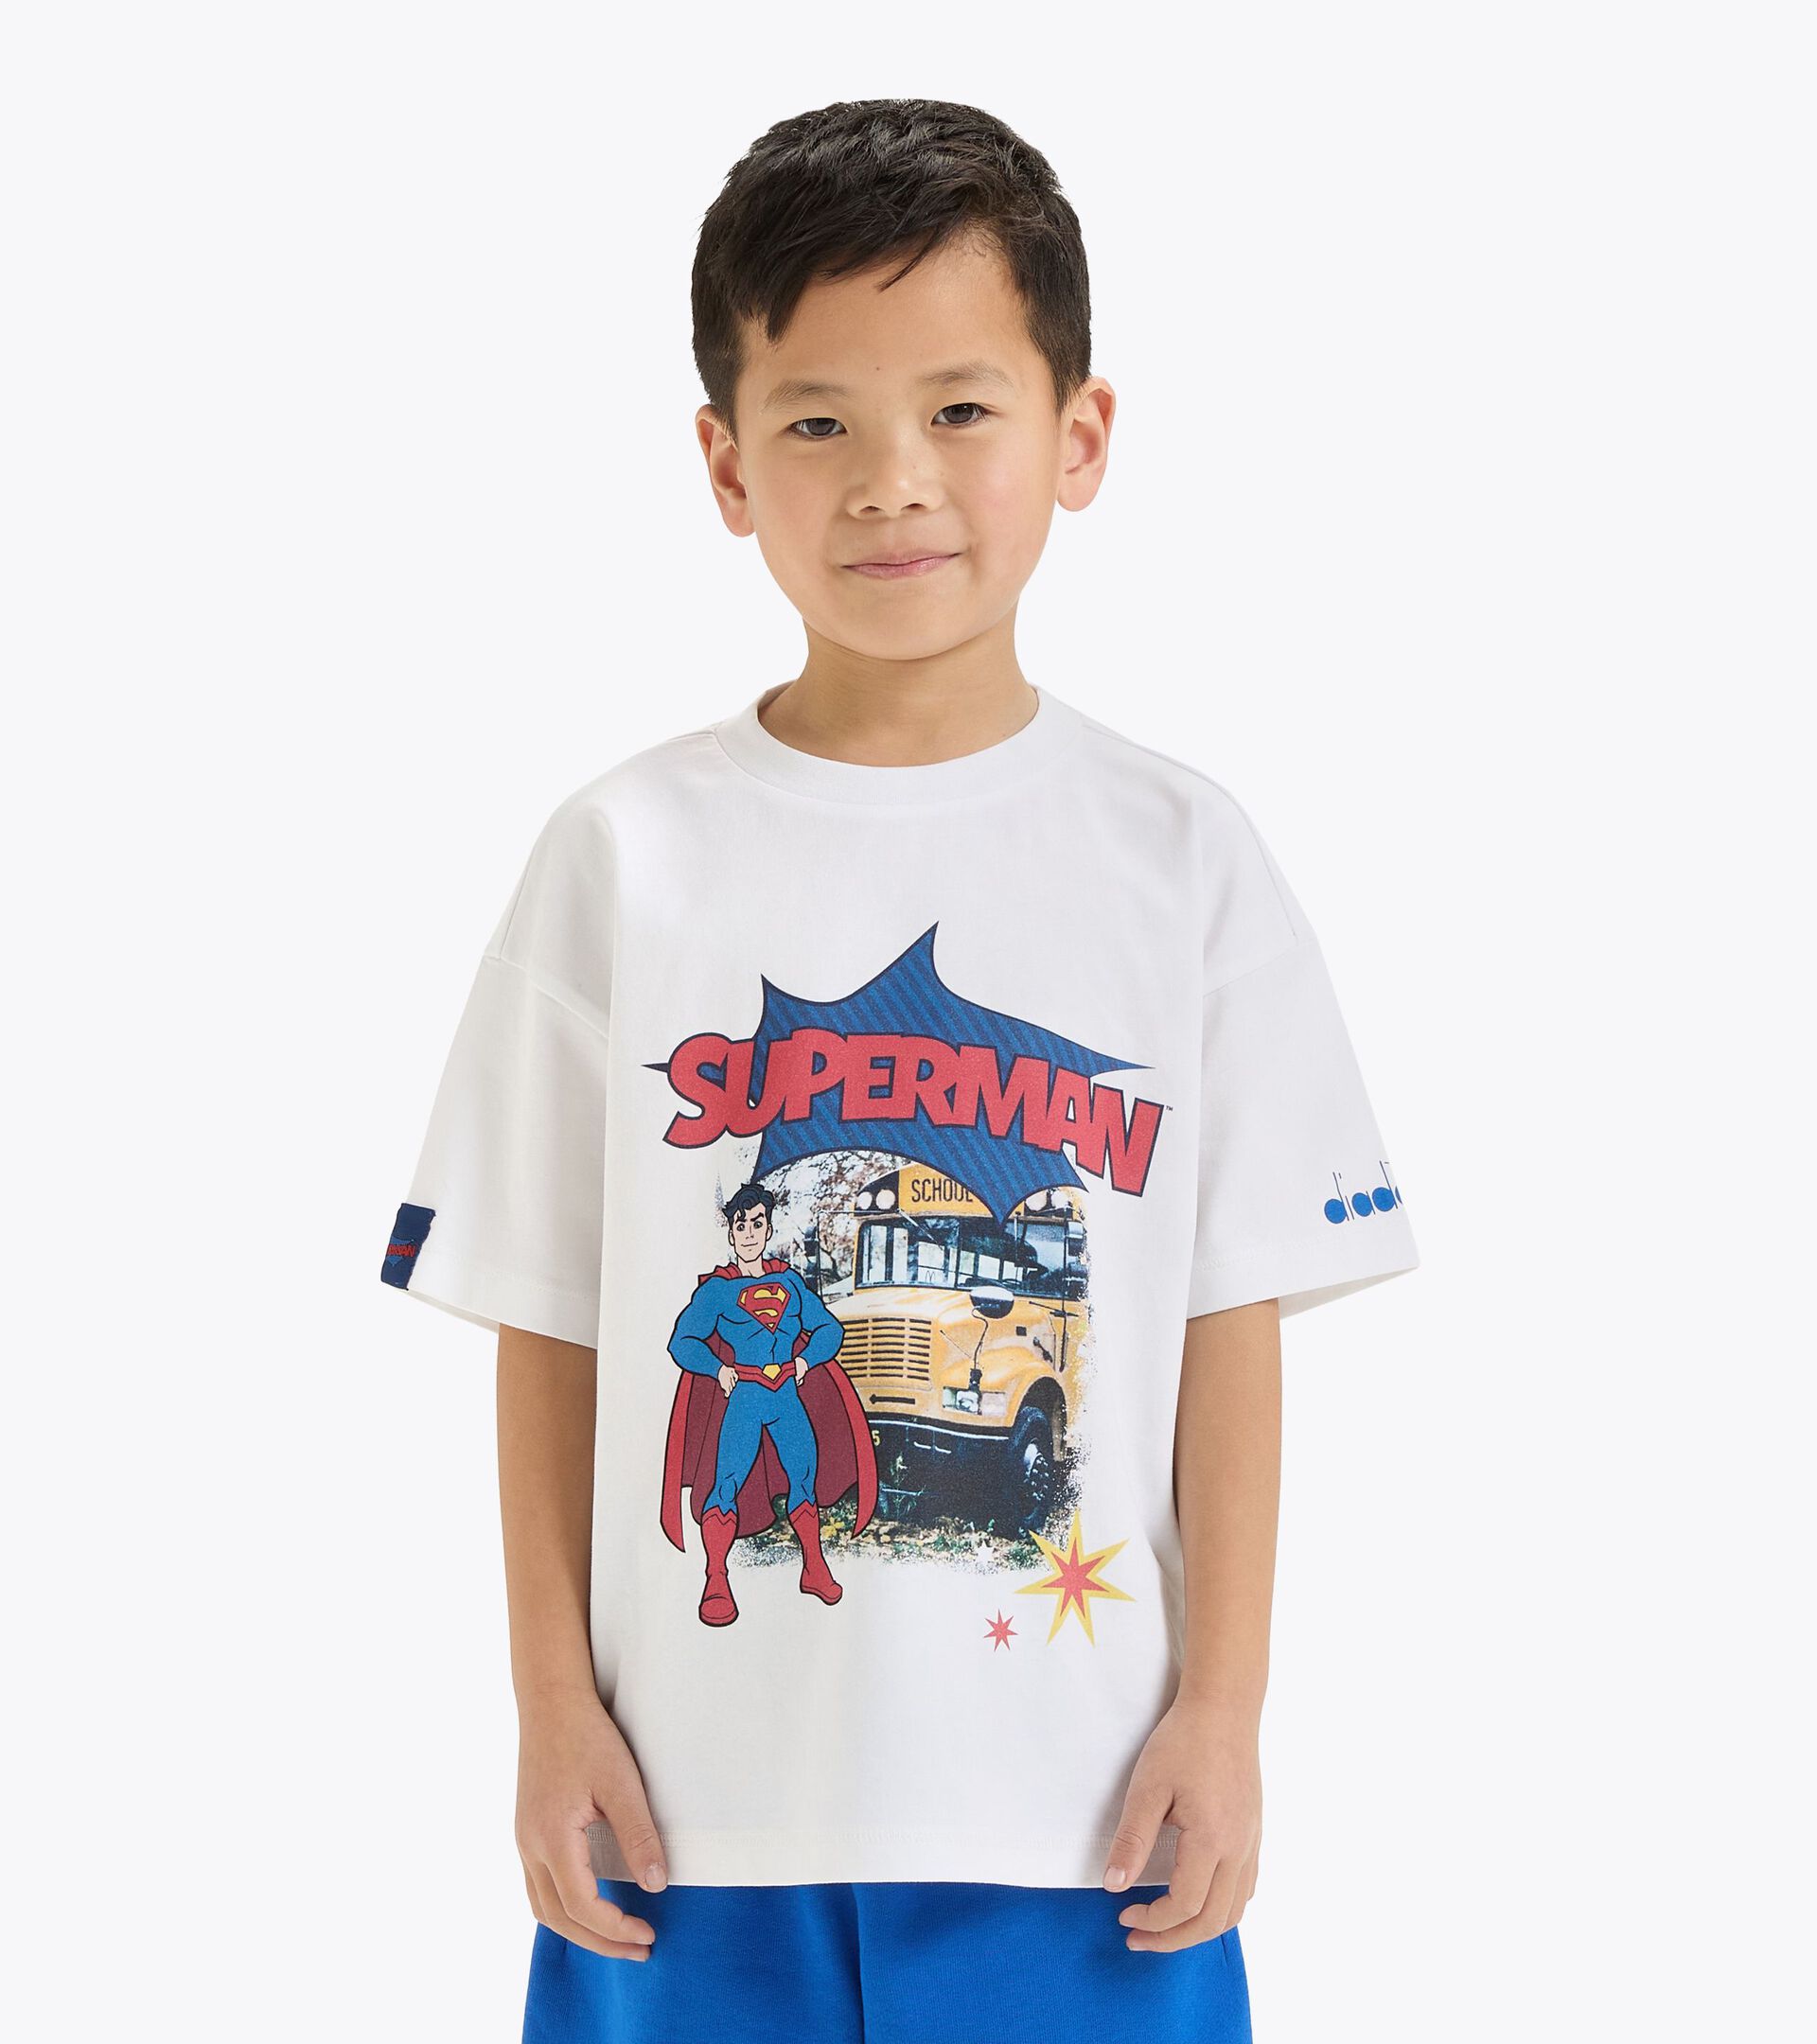 Camiseta superhéroes - Niños y niñas  JU.T-SHIRT SS SUPERHEROES 20002/60044 - Diadora